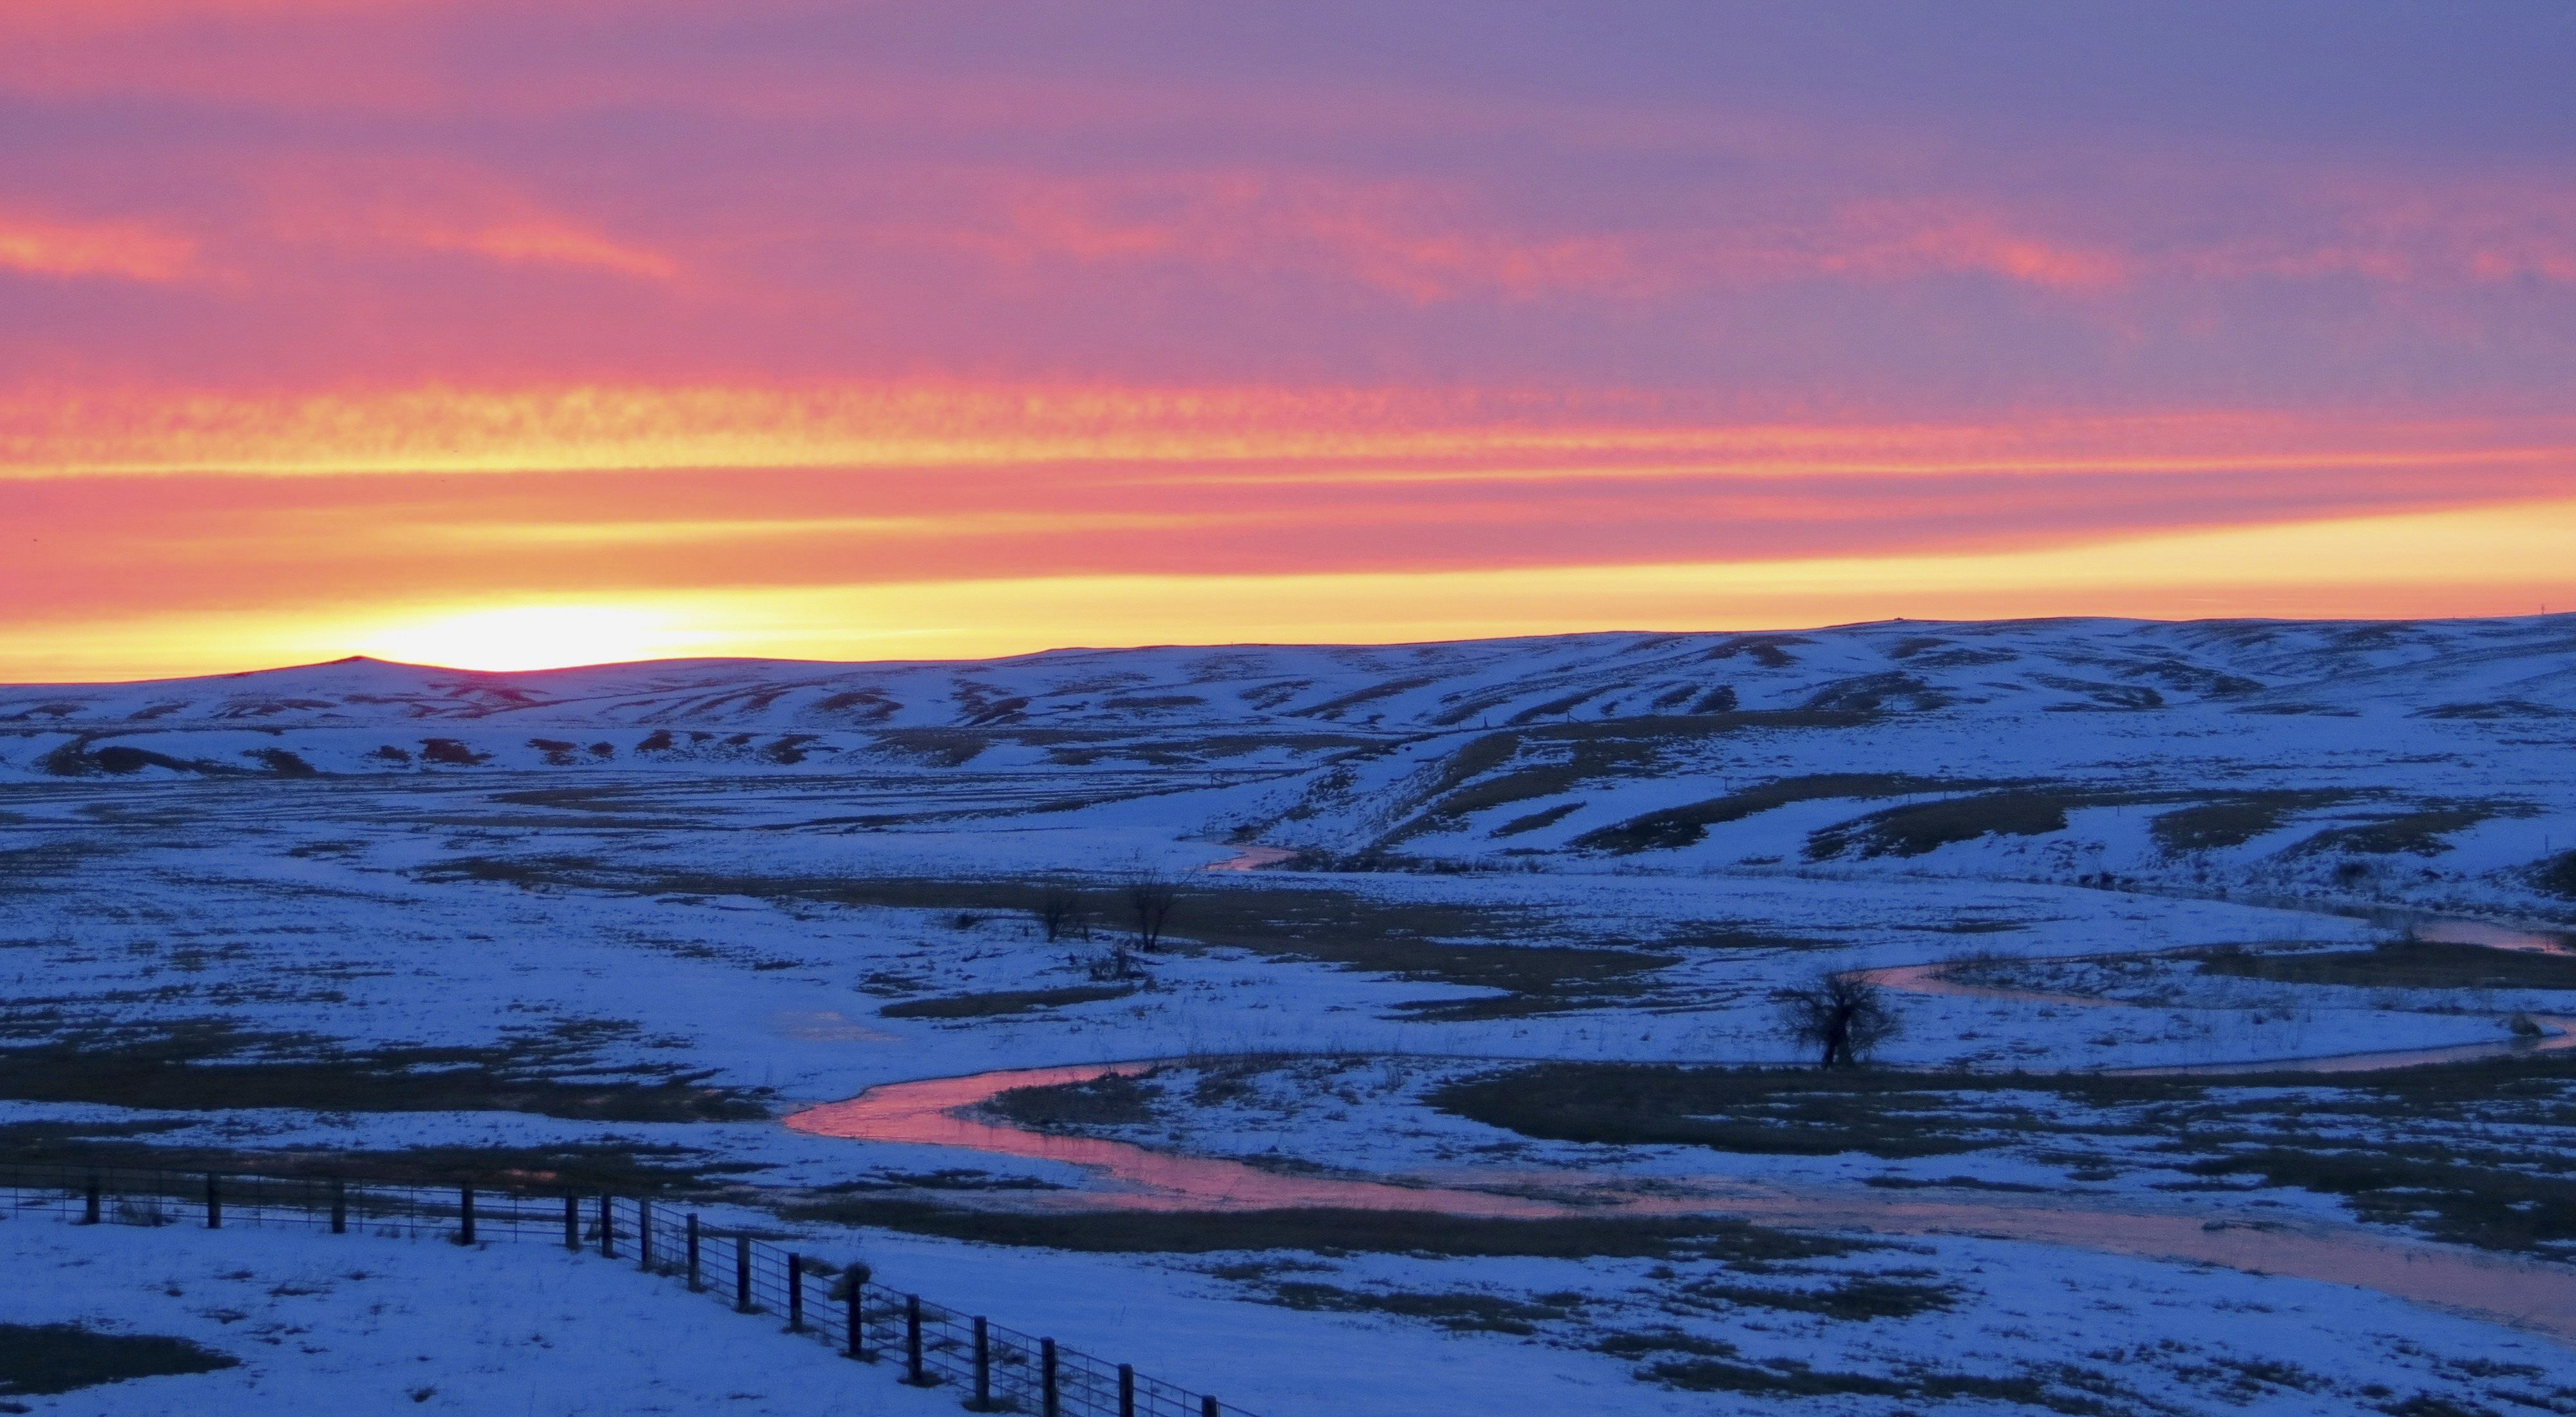 A sunset over the snow-covered South Dakota prairie.